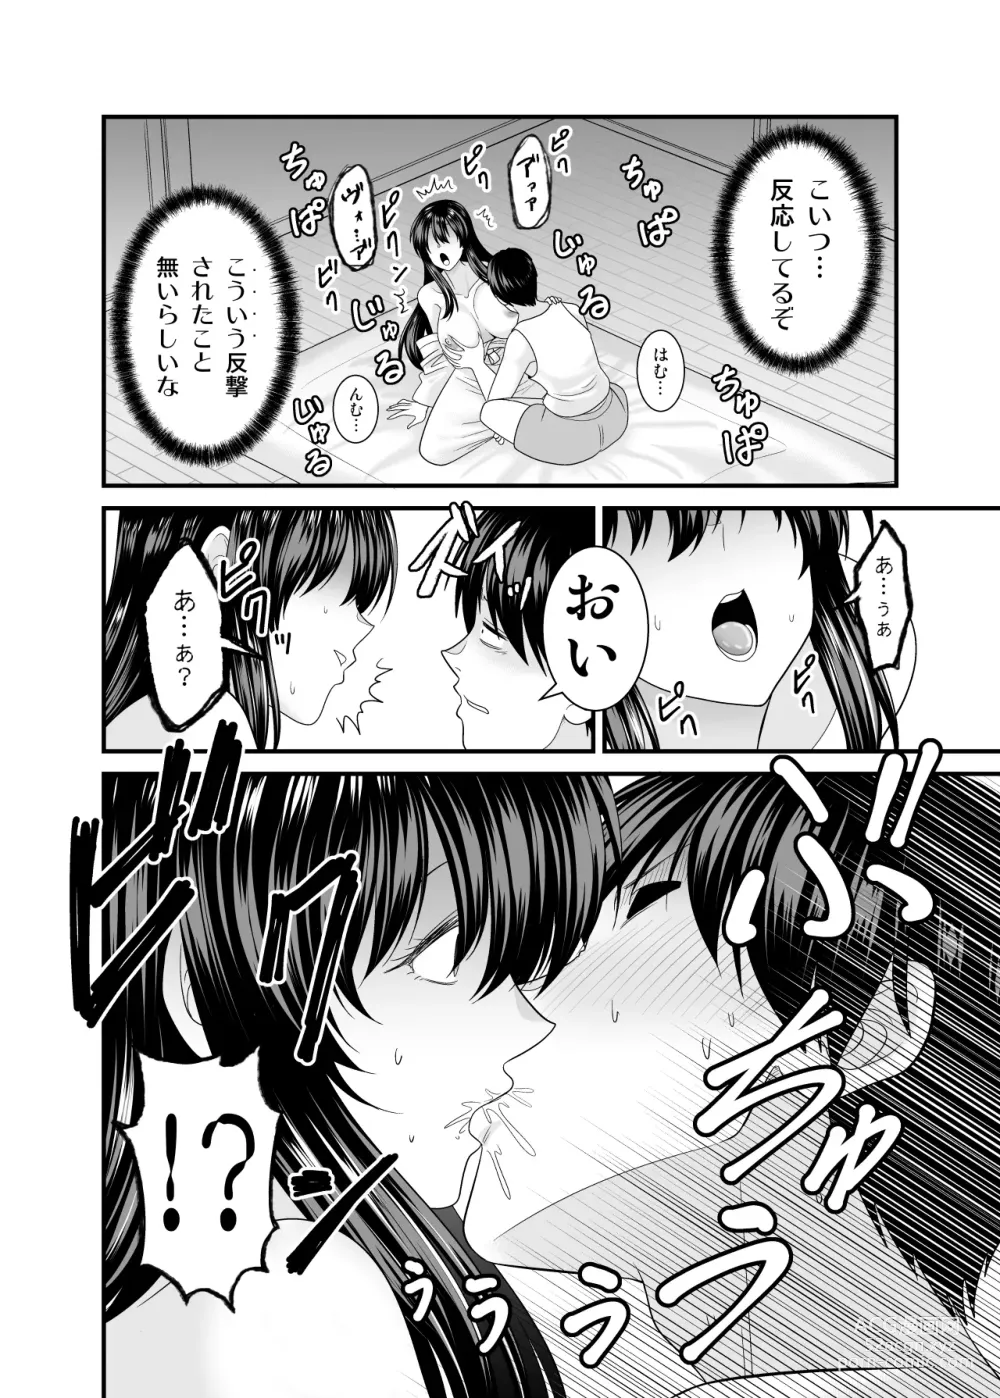 Page 21 of doujinshi ヤバい事故物件に女幽霊が出たけど無職底辺の俺はセックスしまくる